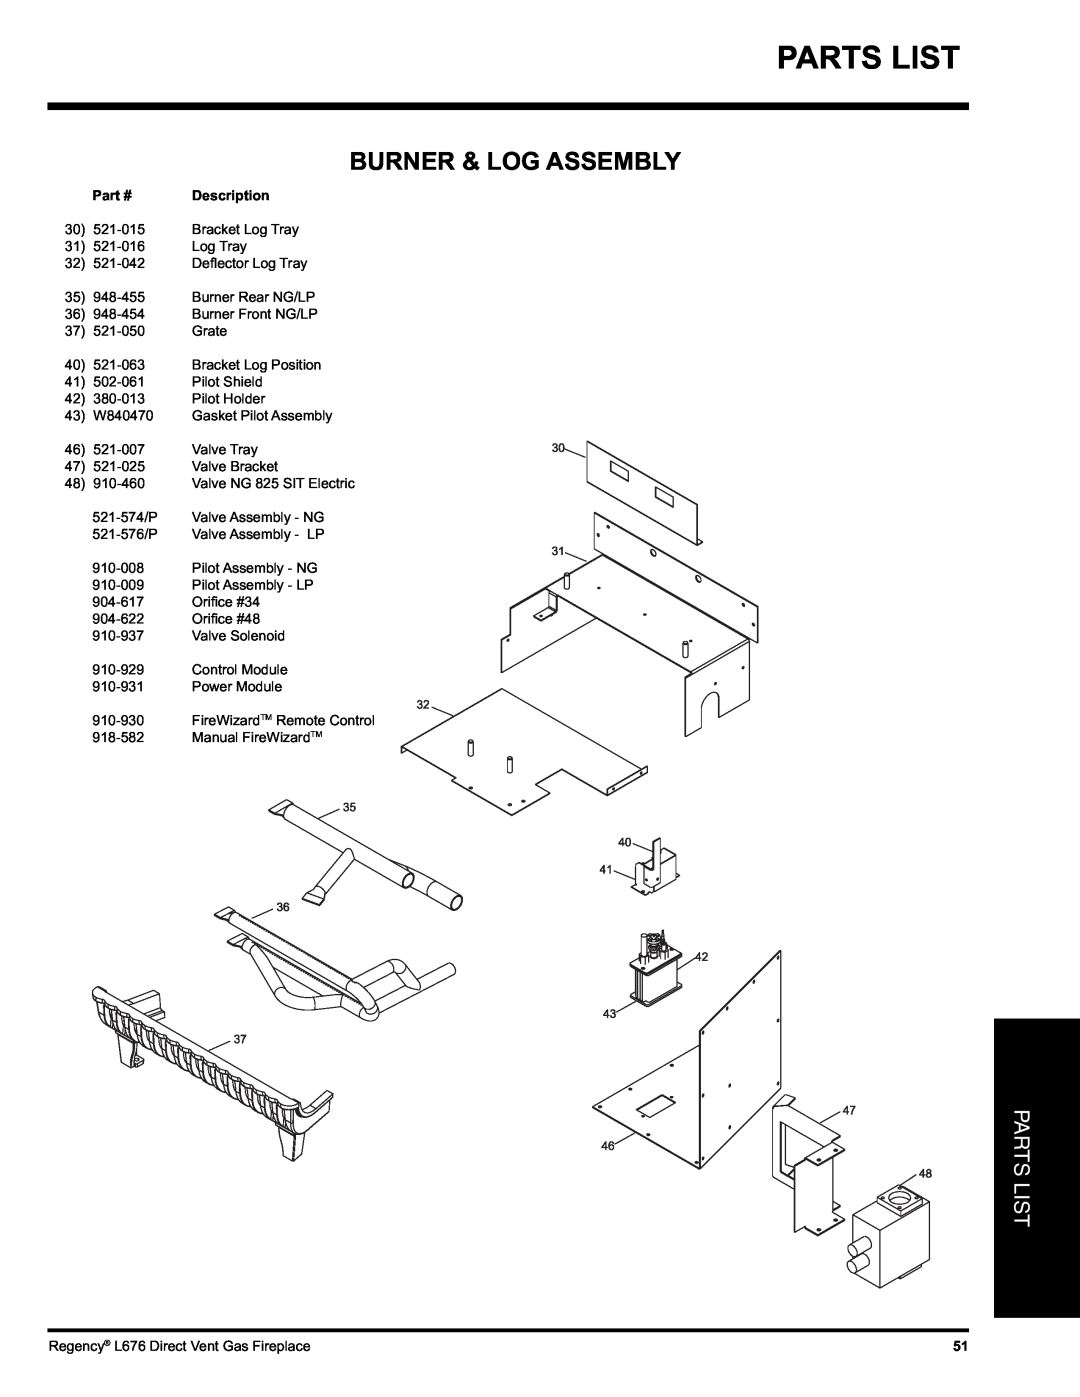 Regency L676 installation manual Parts List, Burner & Log Assembly, Part #, Description 